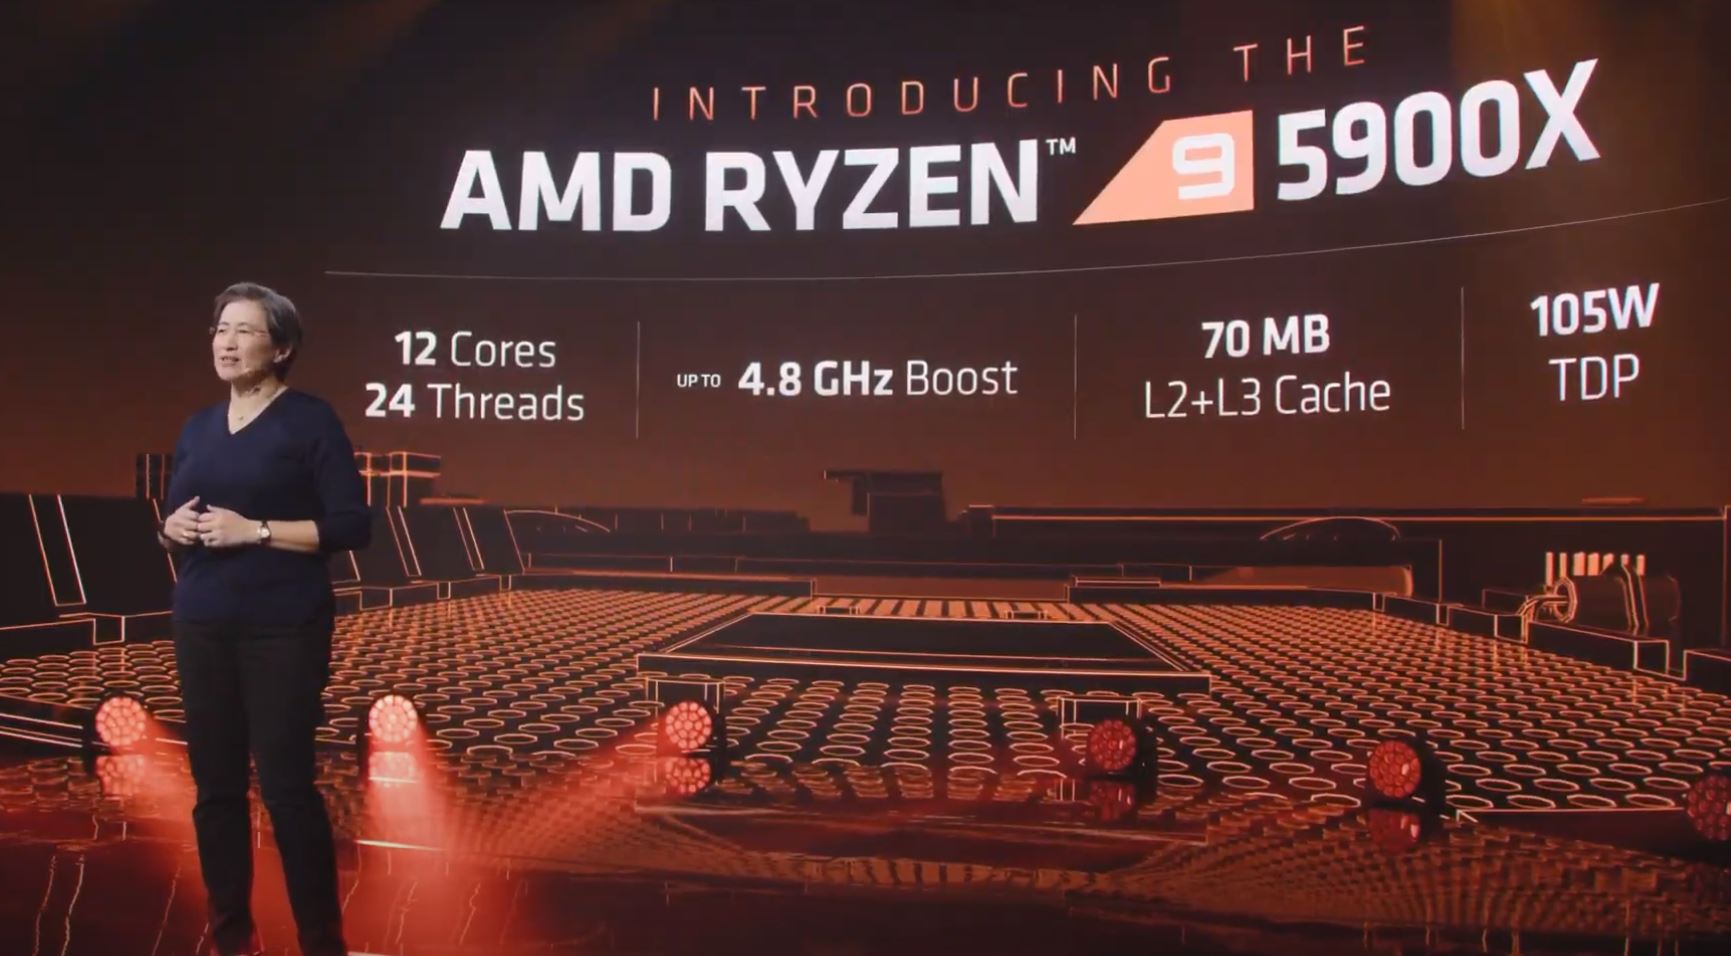 AMD Ryzen 5900X Specs